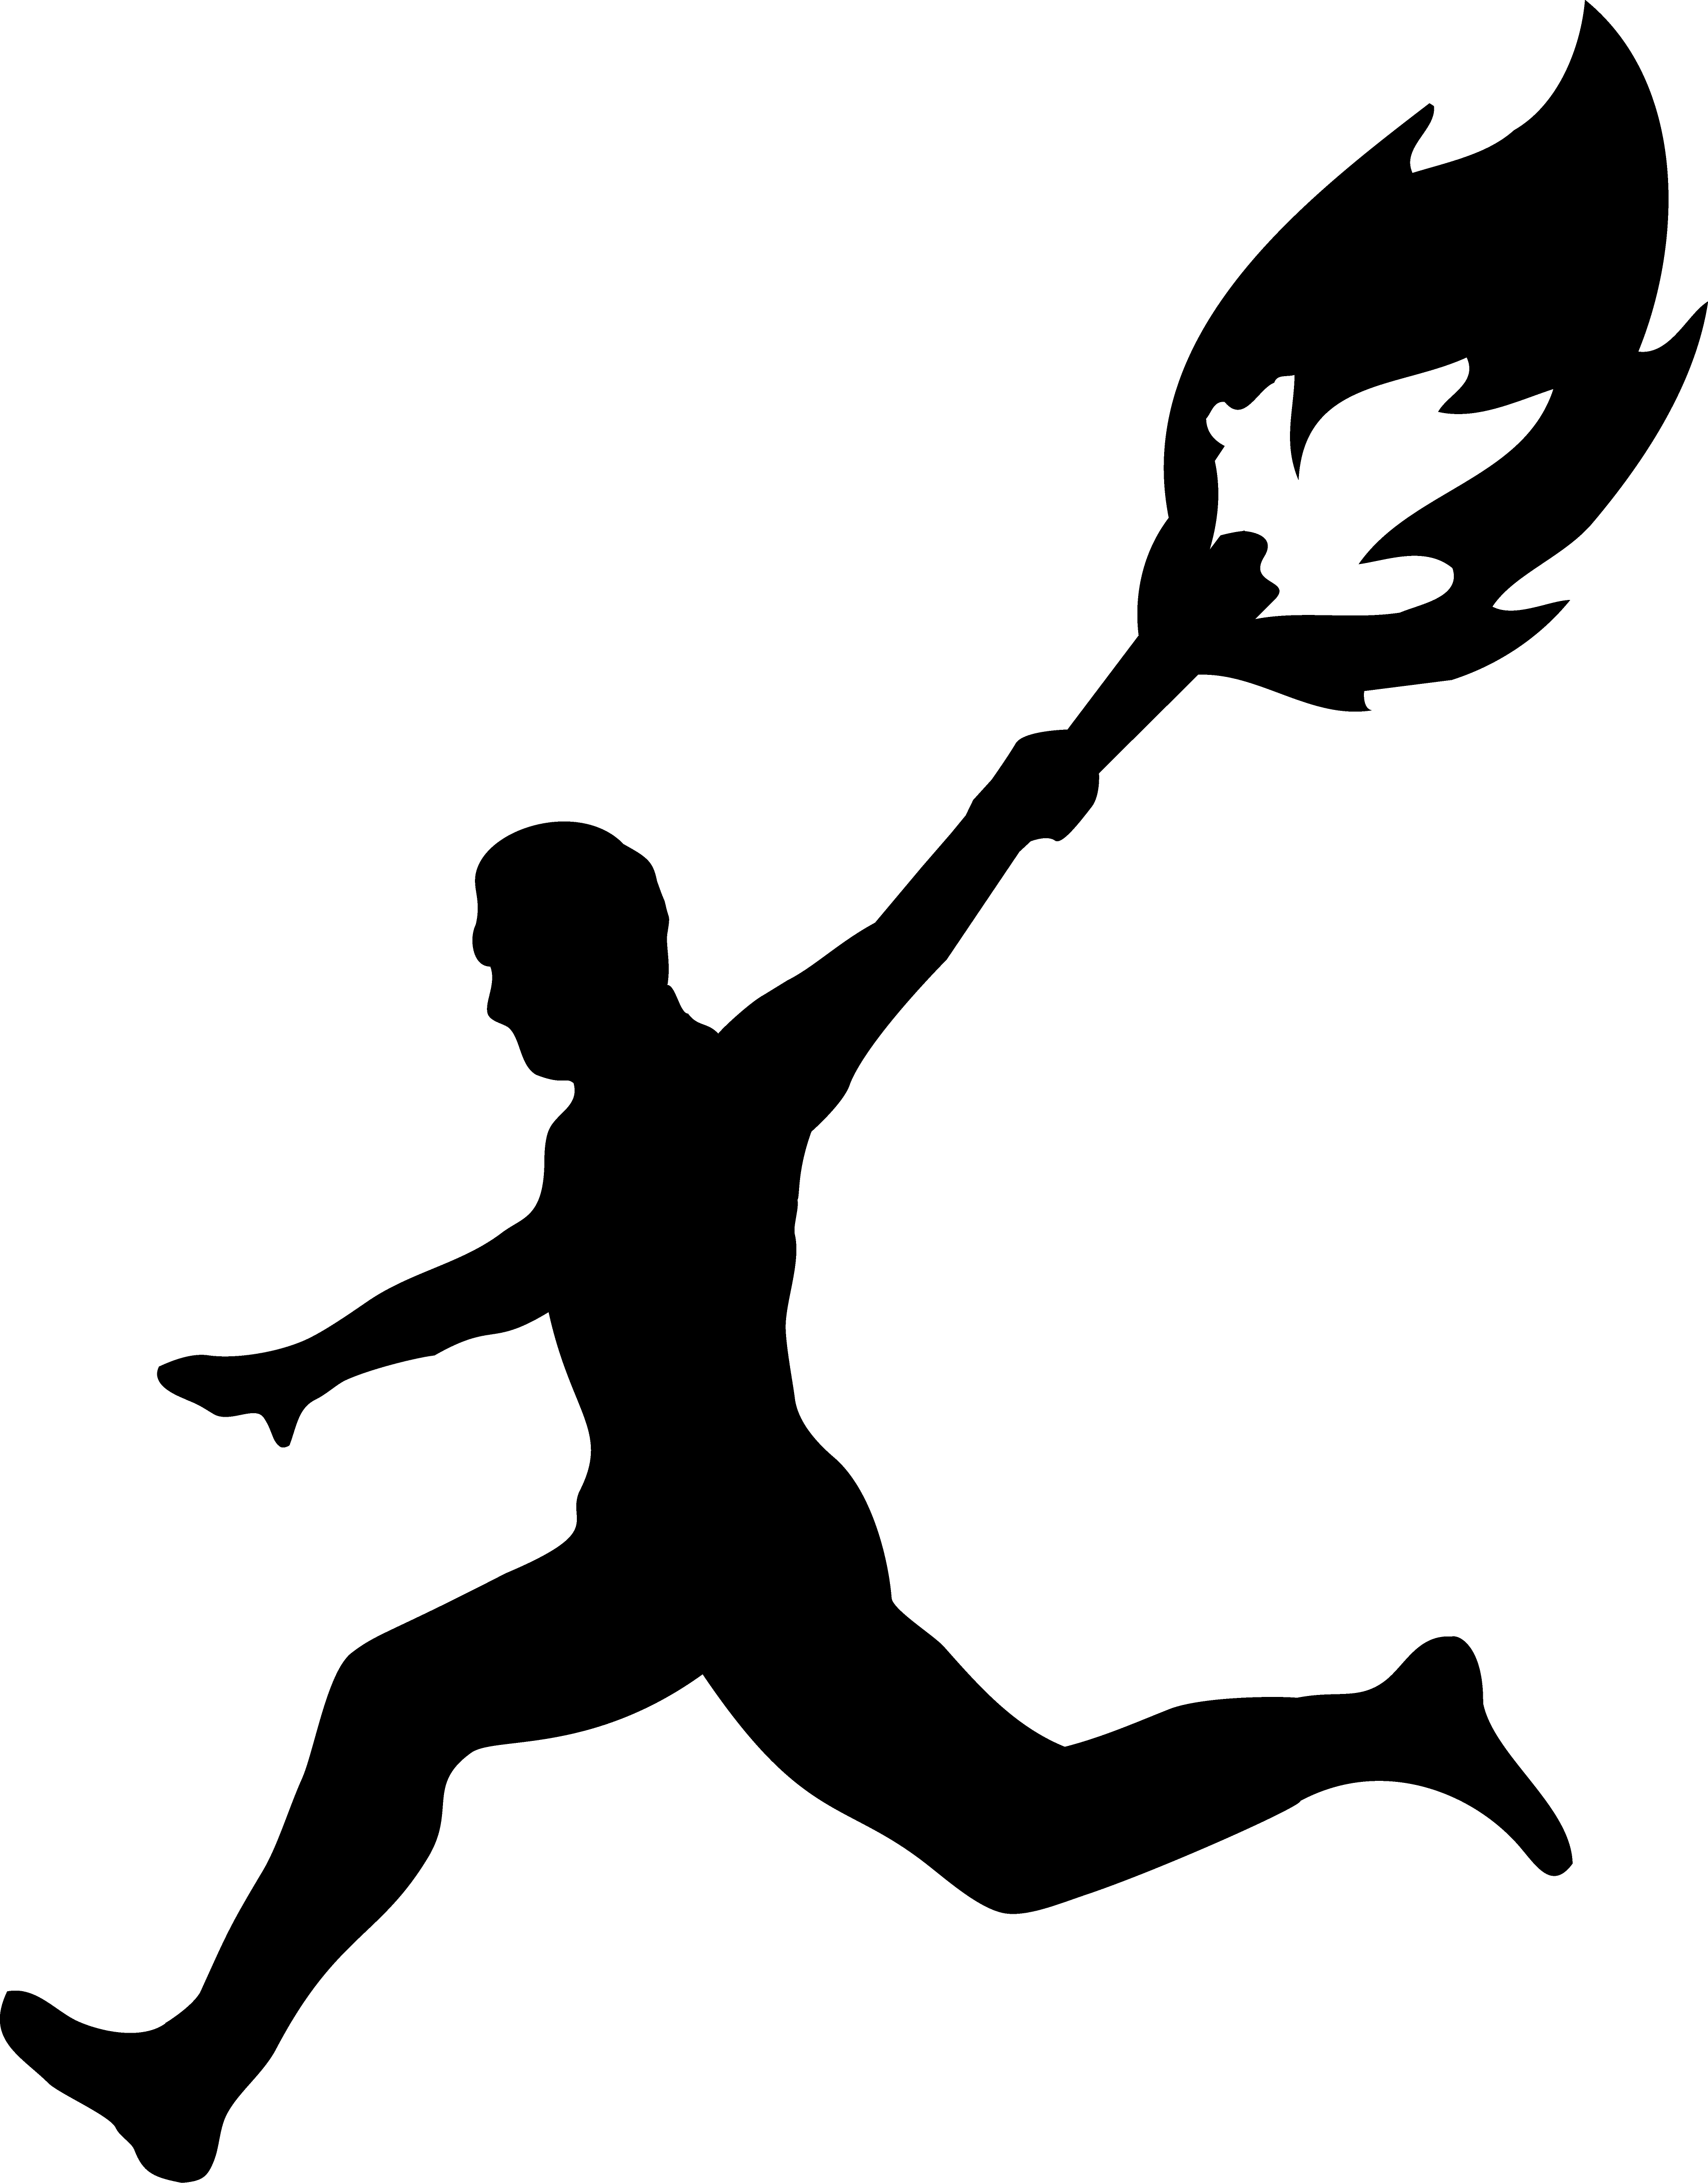 Person Running Logo - Torch Man | Free Images at Clker.com - vector clip art online ...